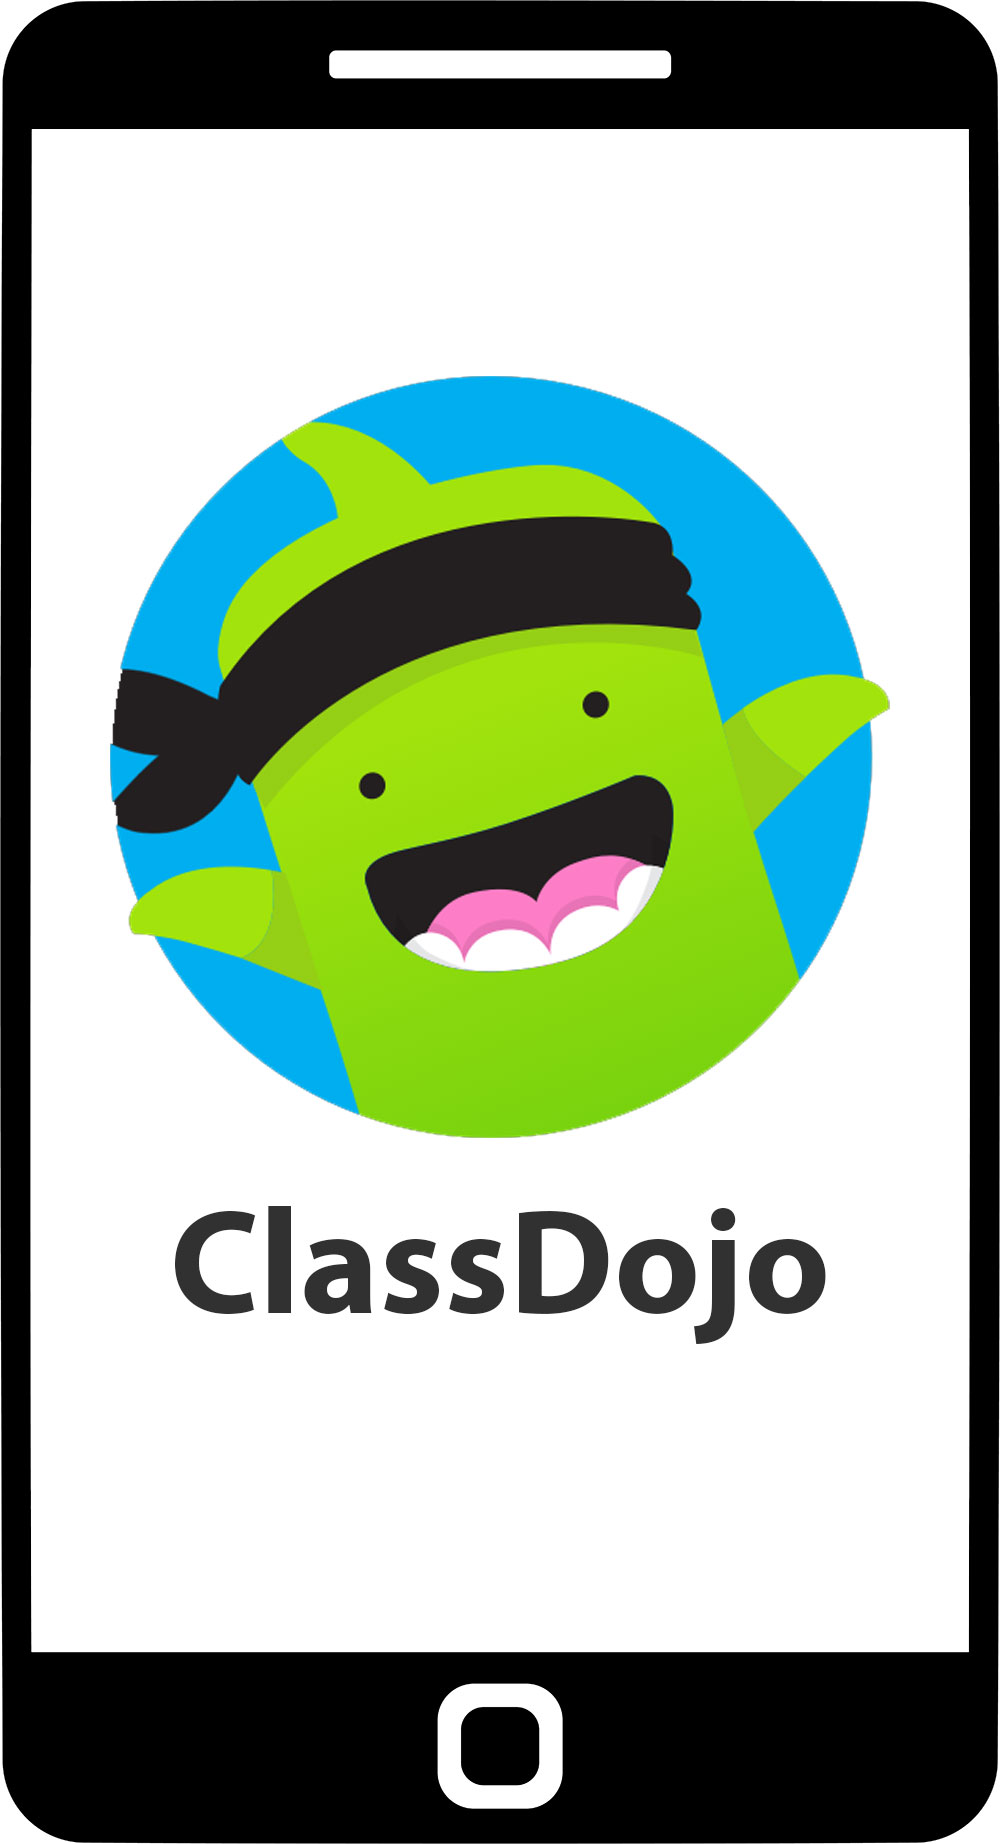 ClassDojo logo on a mobile screen.